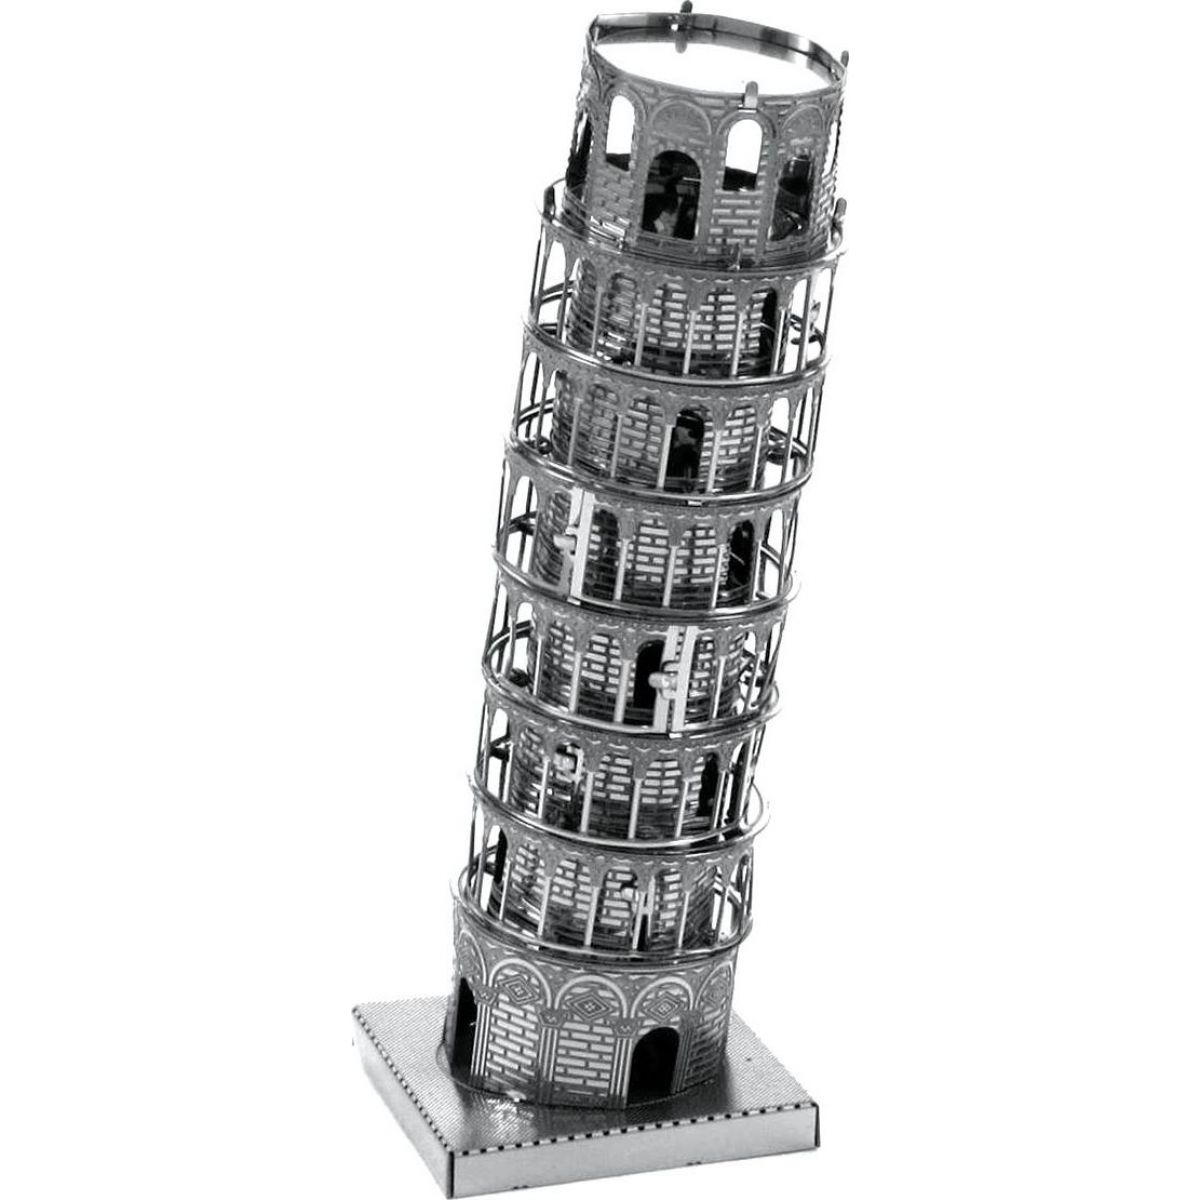 Metal Earth Tower of Pisa